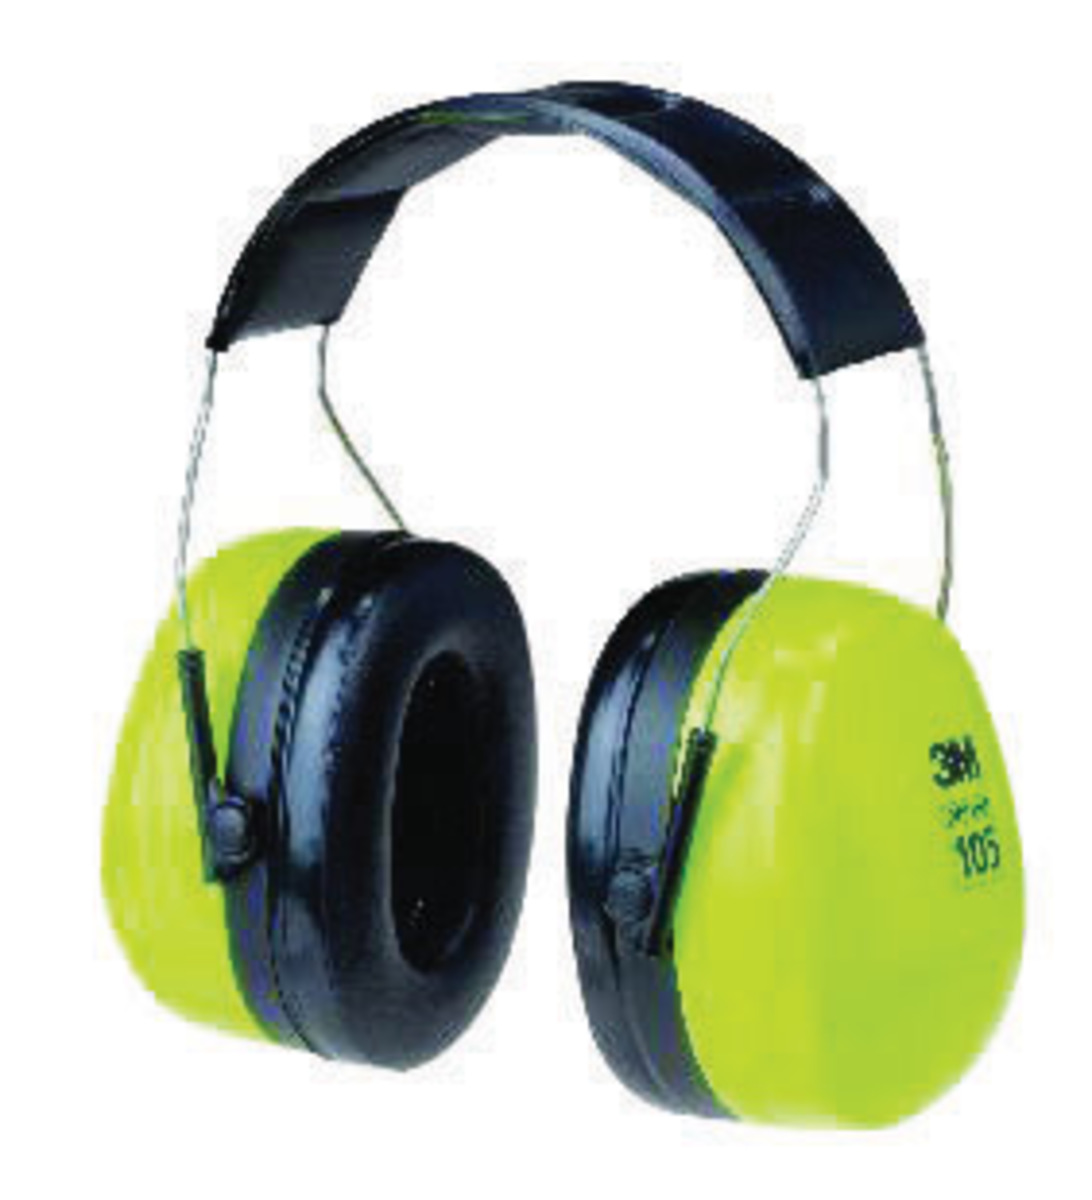 3M™ Optime™ 105 Hi-Viz Green And Black Over-The-Head Earmuffs